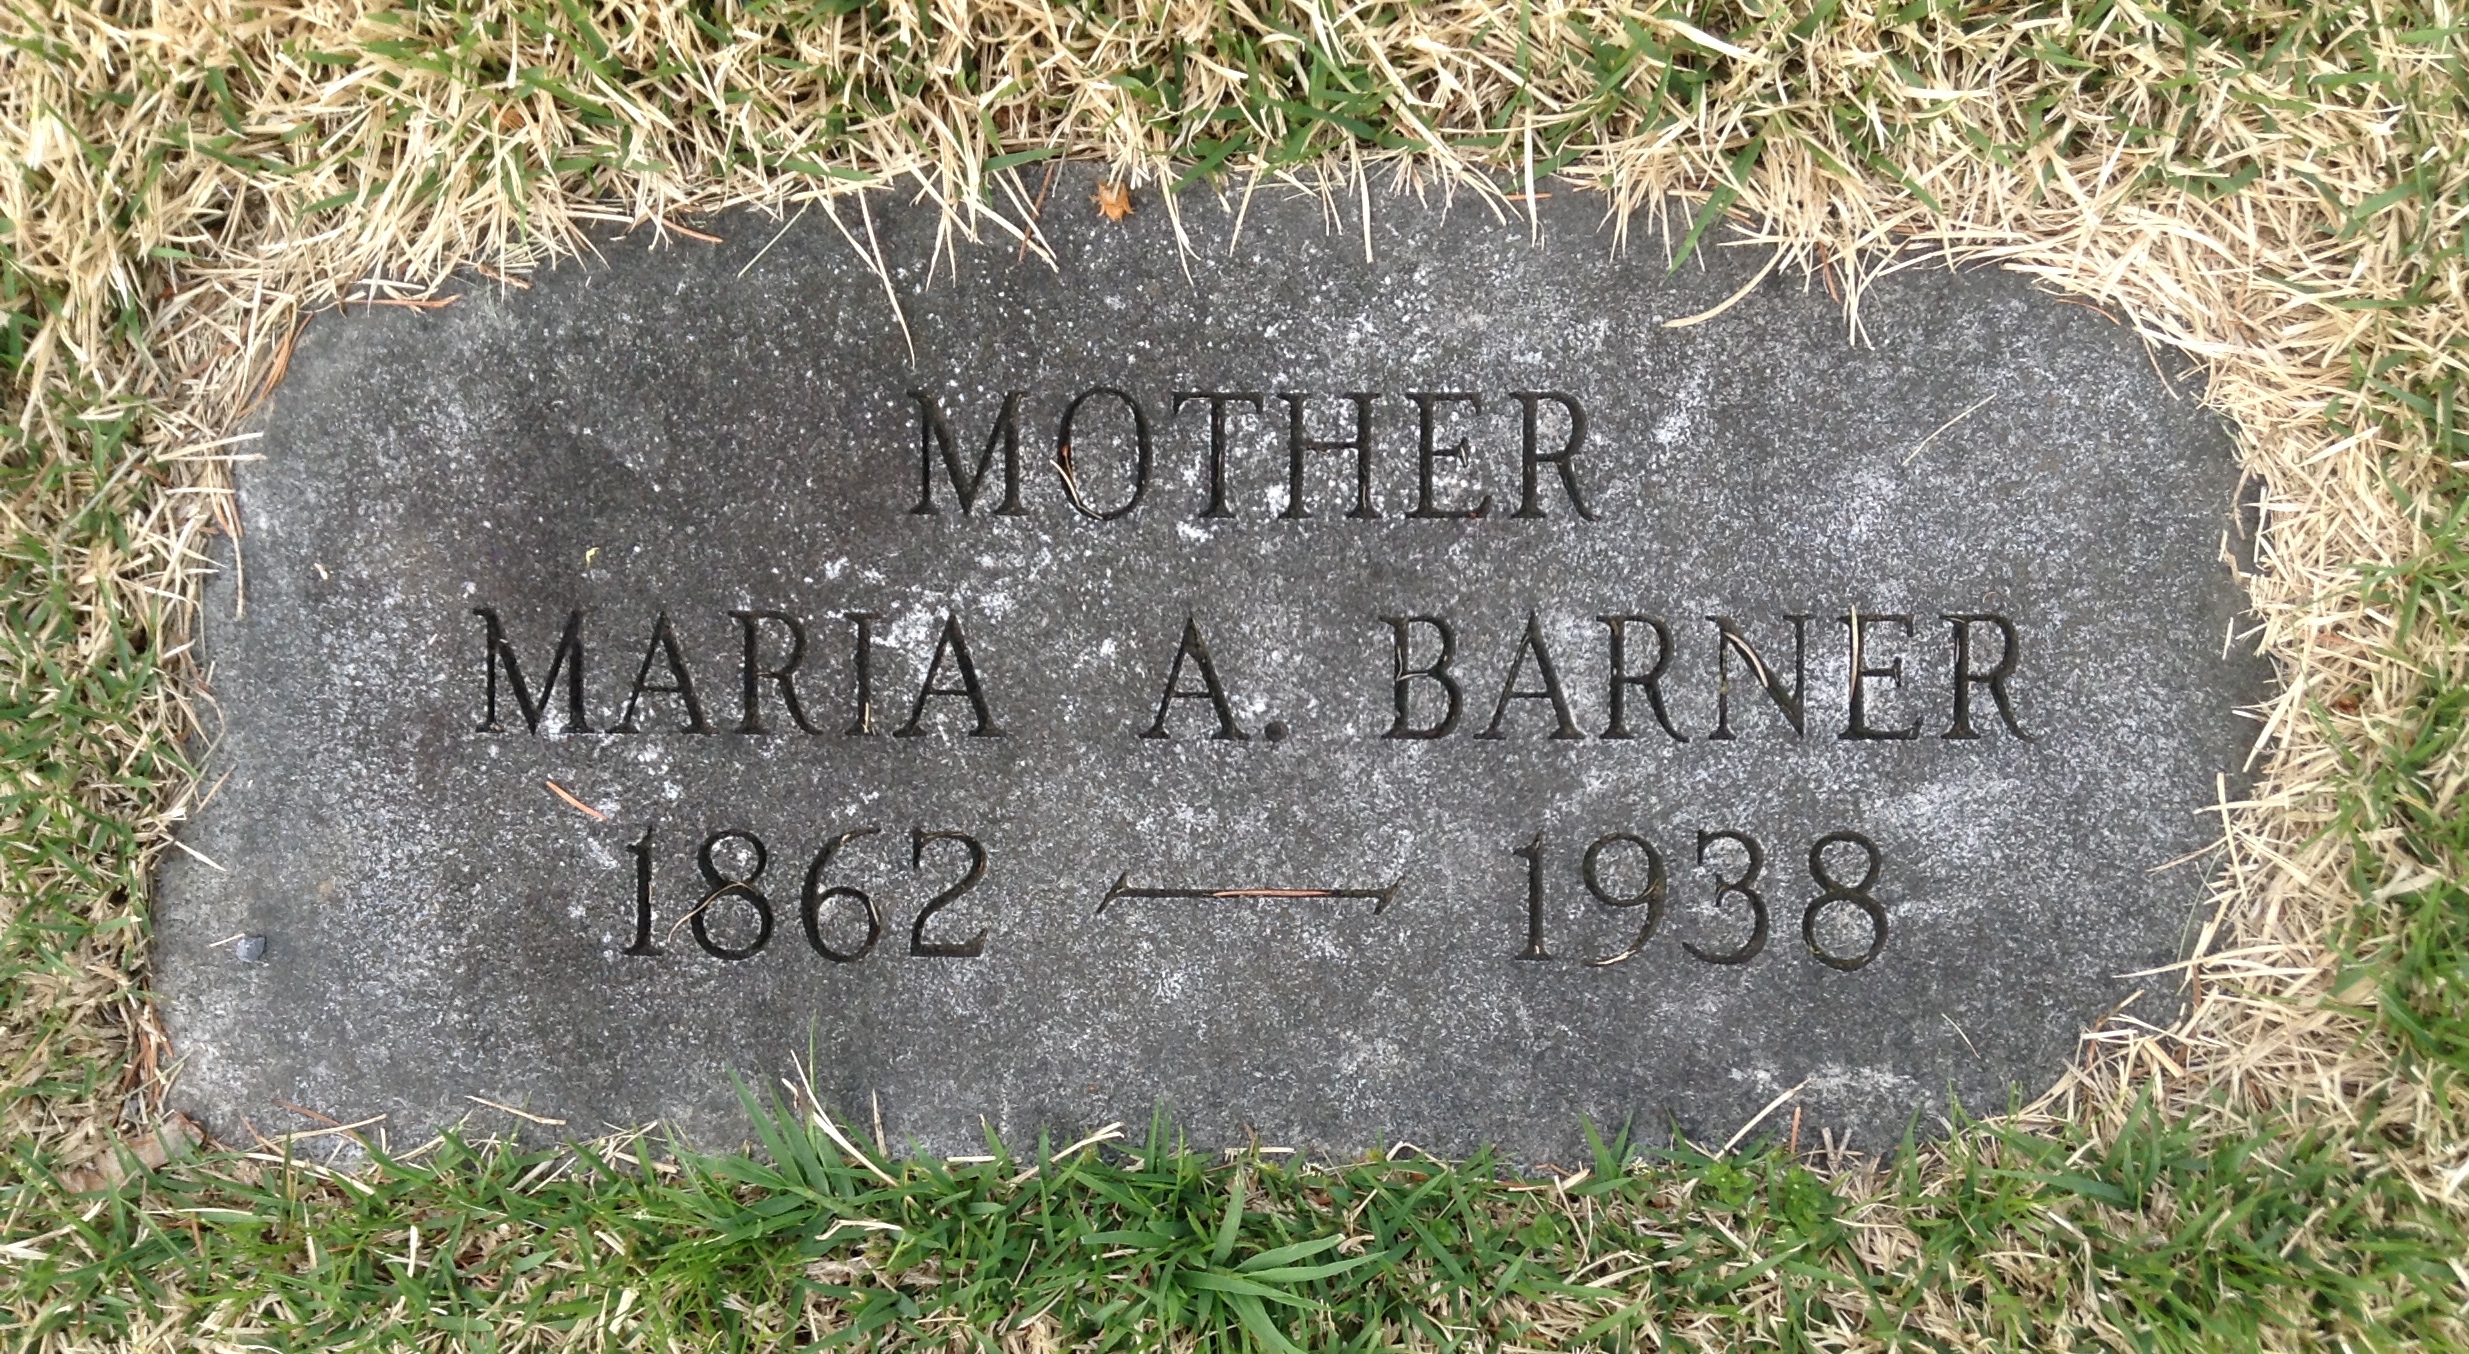 Maria A. McKenzie Barner 1862-1938
